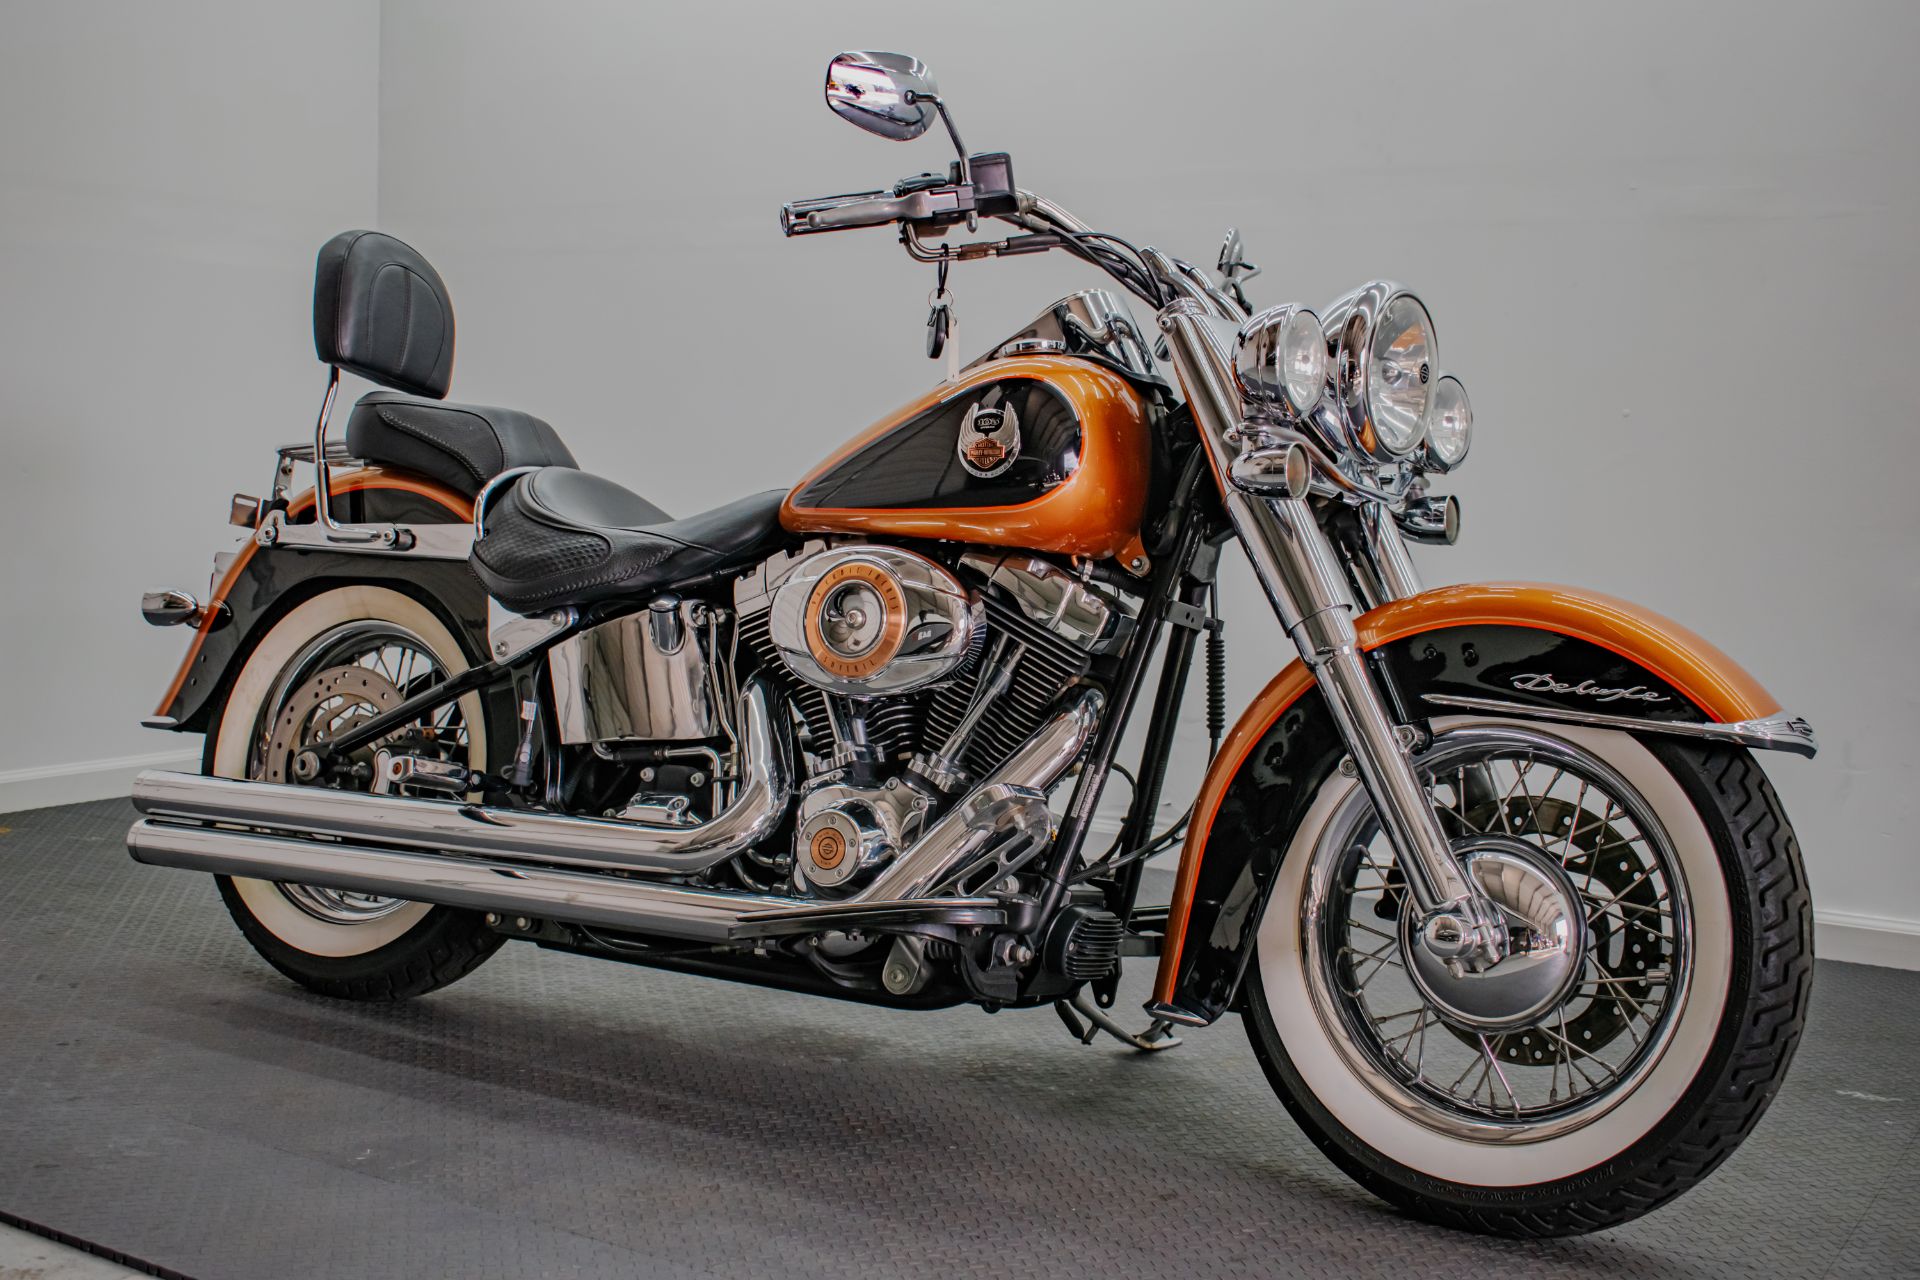 2008 Harley-Davidson Softail® Deluxe in Jacksonville, Florida - Photo 5